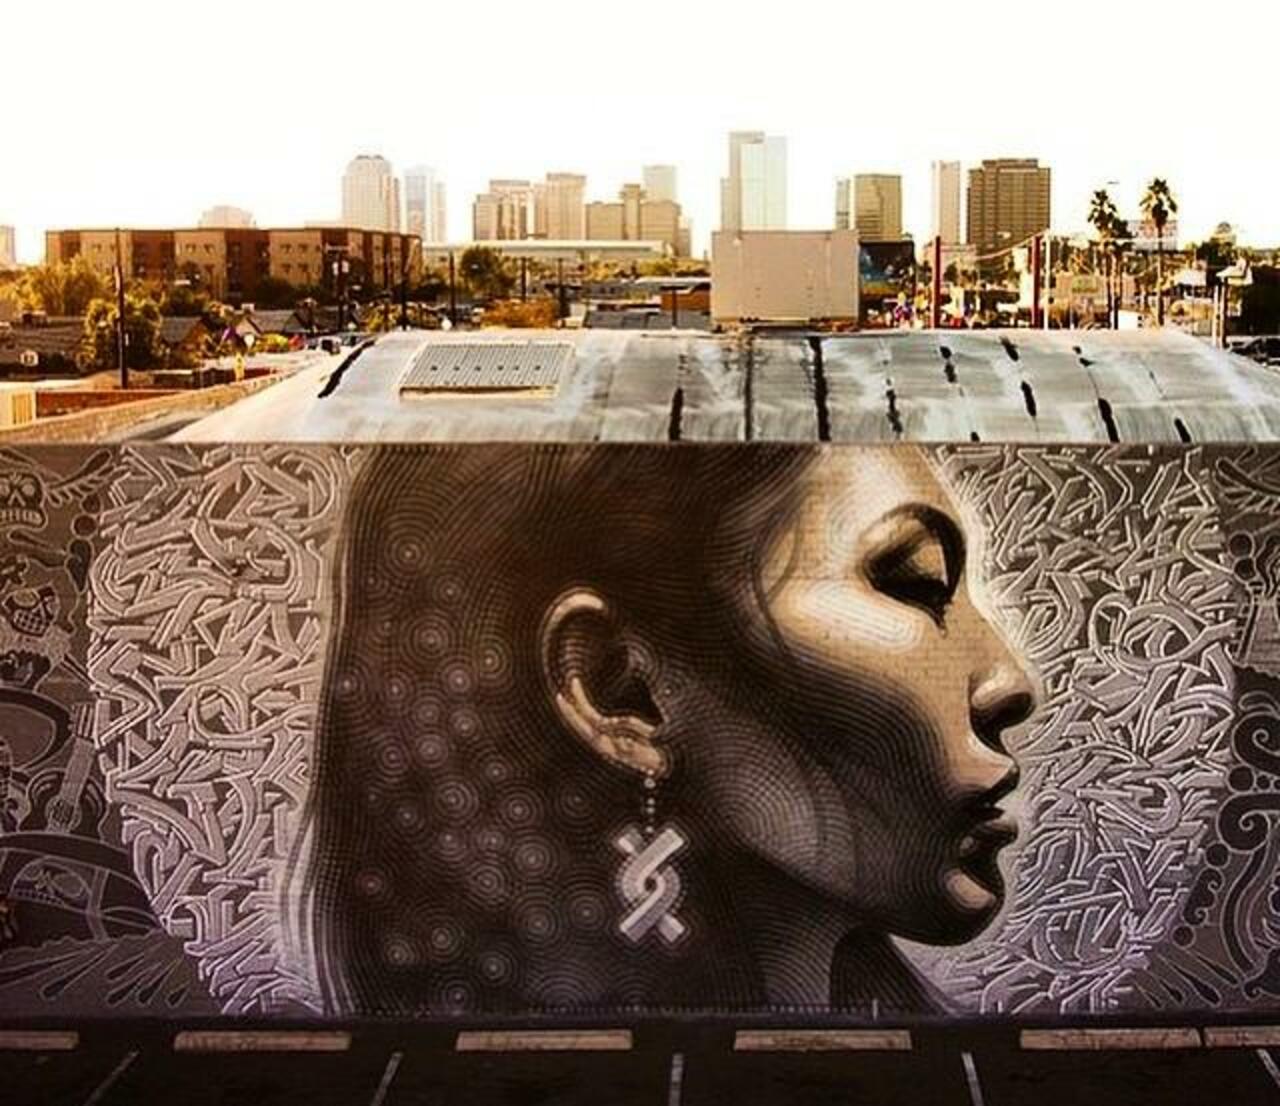 RT "@GoogleStreetArt: Latest Street Art work by El Mac in Phoenix, Arizona

#art #mural #graffiti #streetart http://t.co/oB4GVaE3mY"